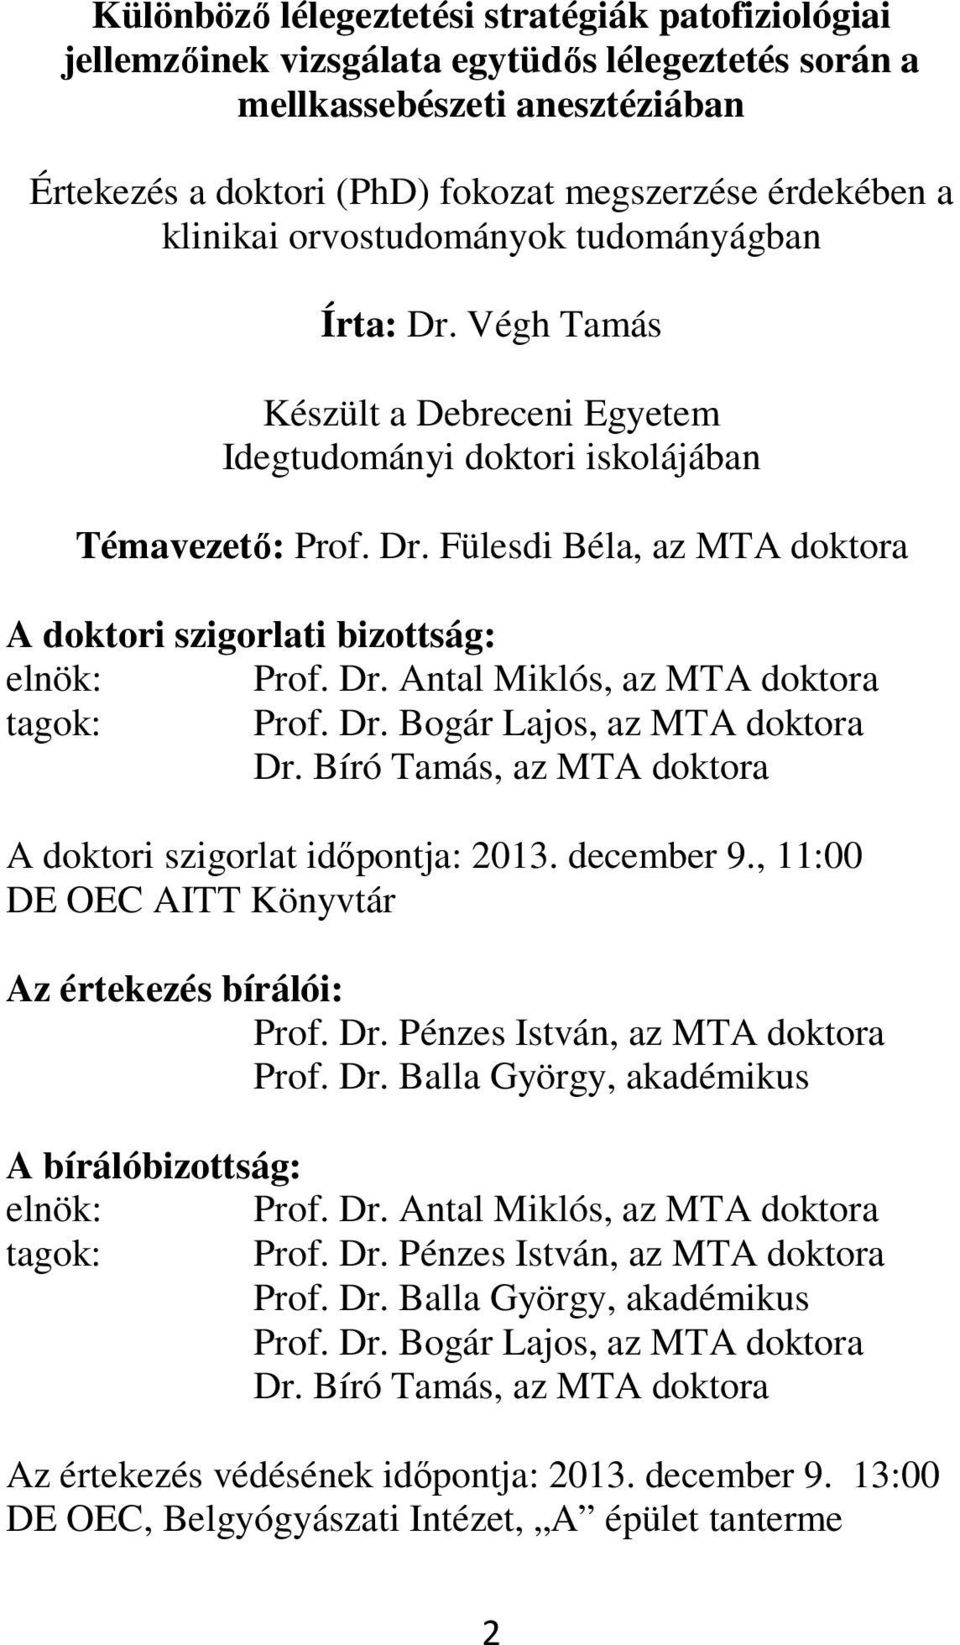 Dr. Antal Miklós, az MTA doktora tagok: Prof. Dr. Bogár Lajos, az MTA doktora Dr. Bíró Tamás, az MTA doktora A doktori szigorlat időpontja: 2013. december 9.